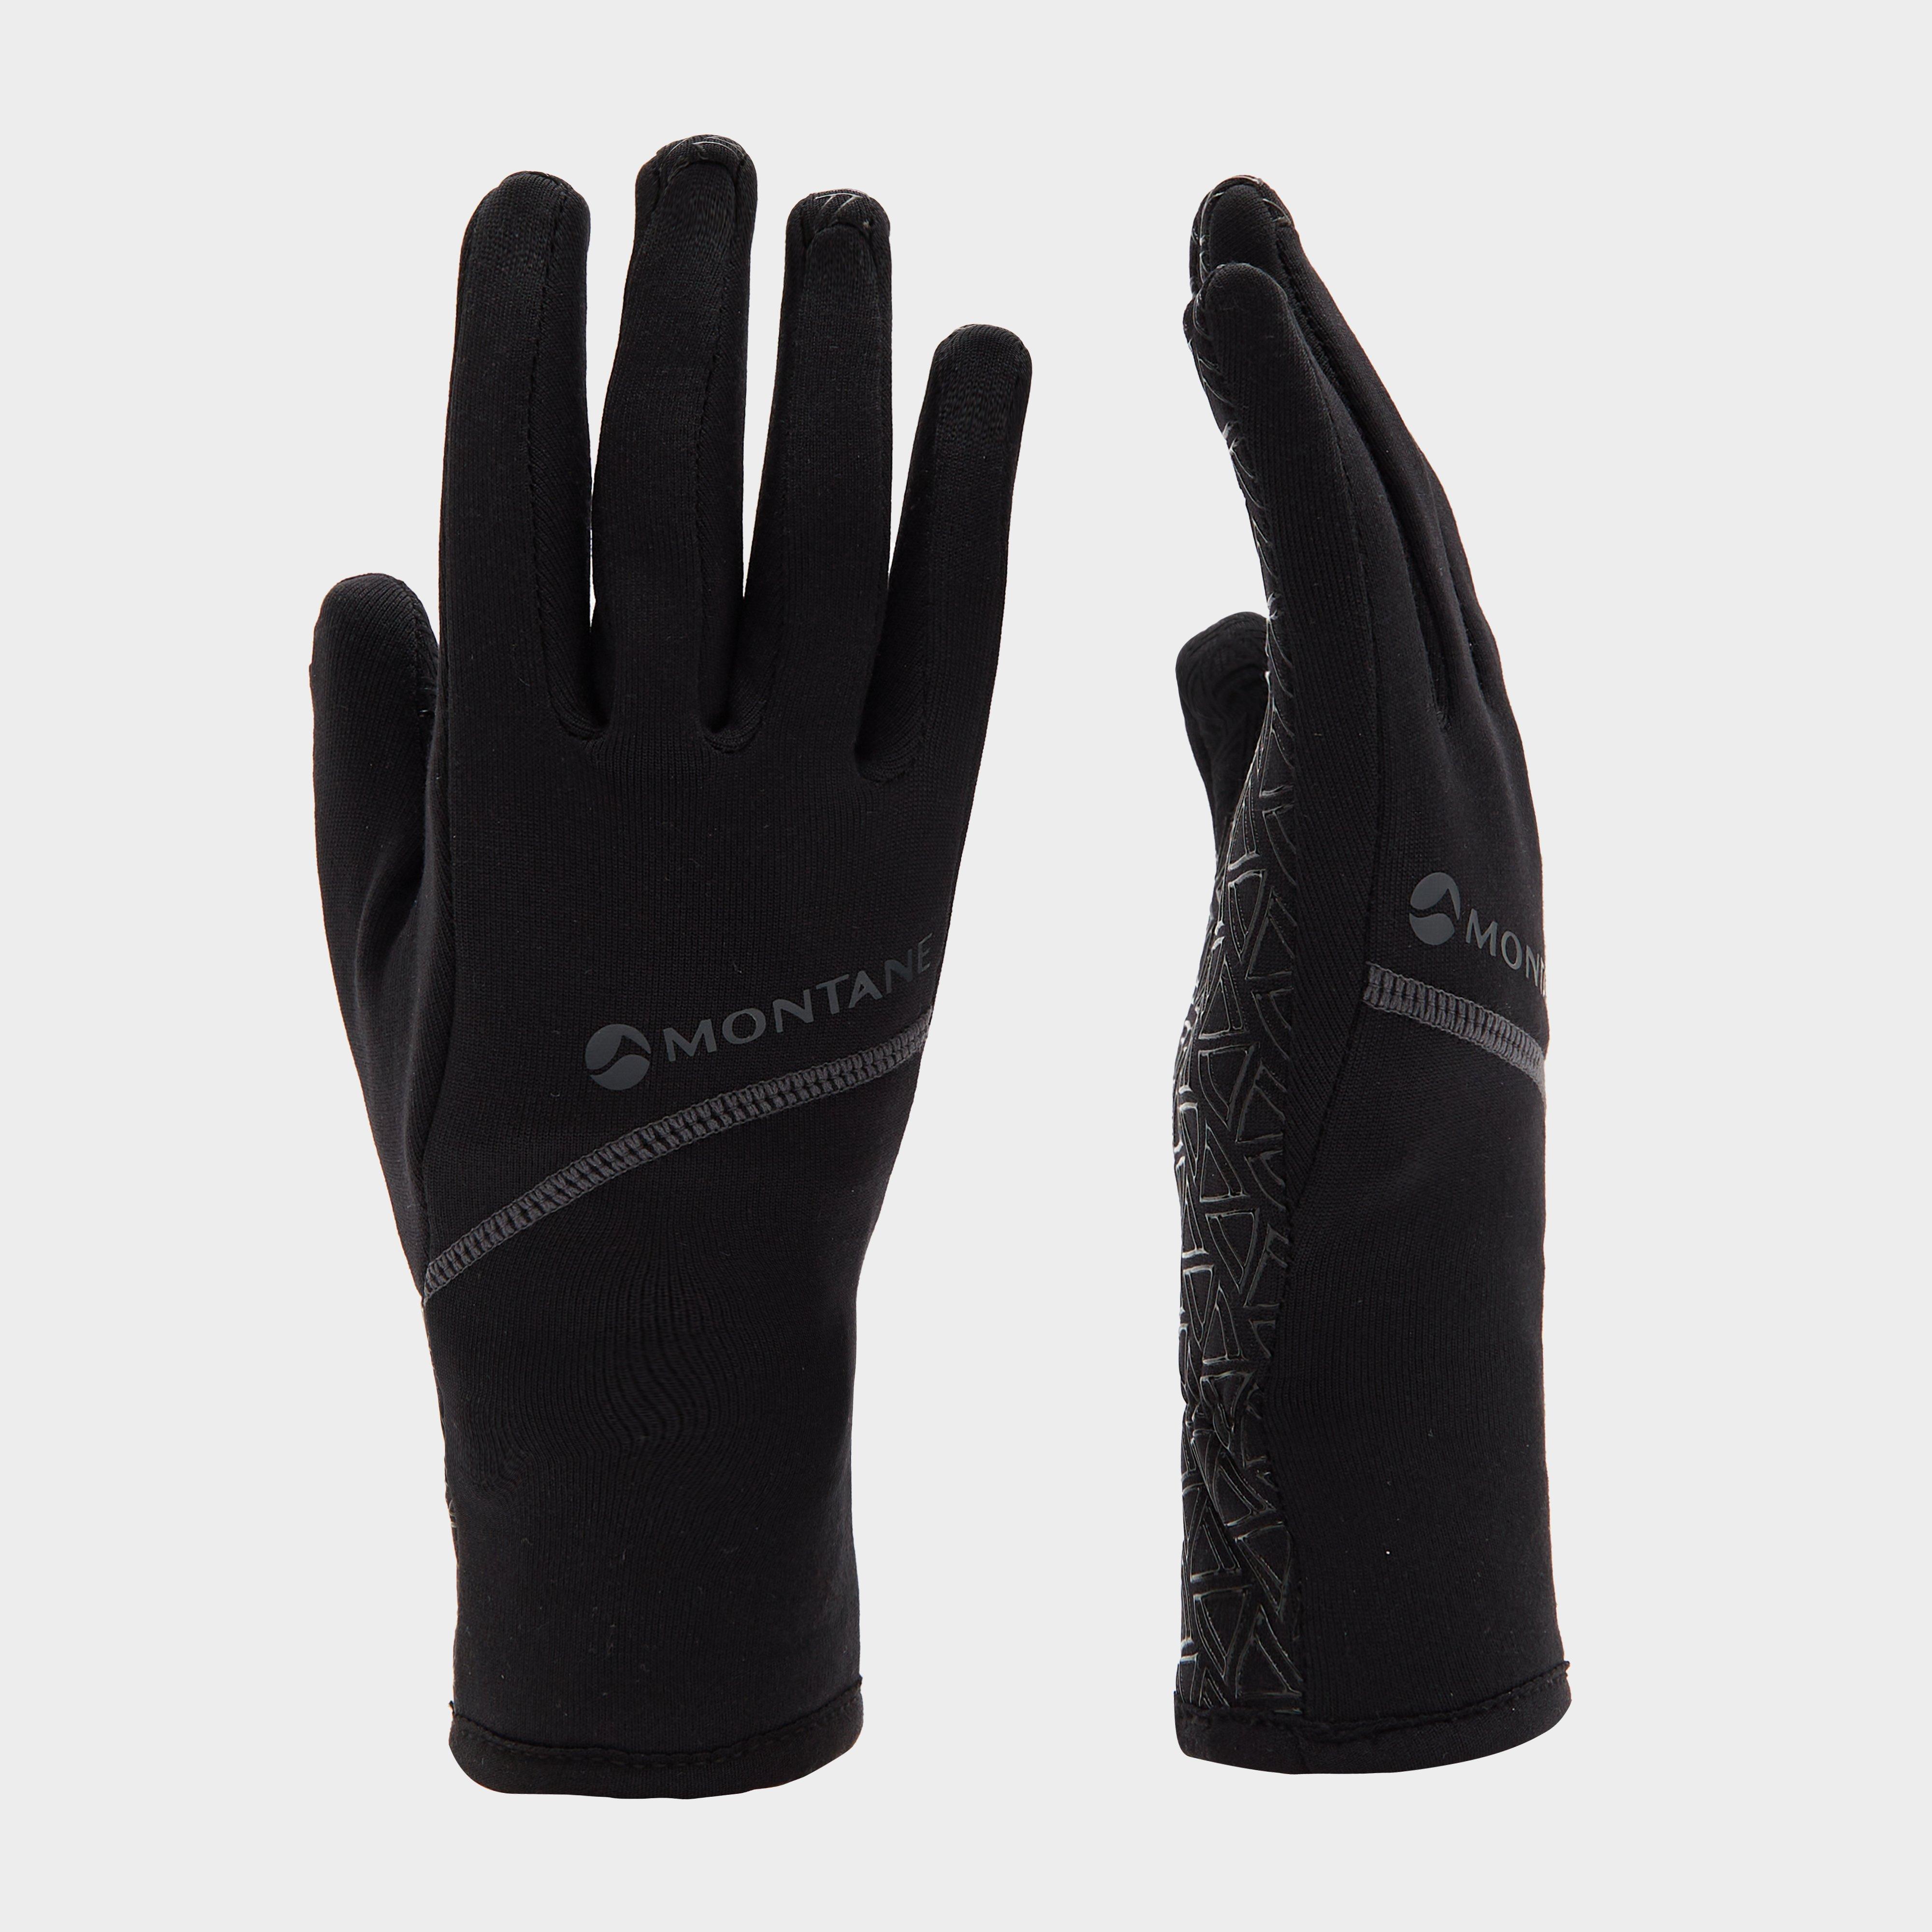 Montane Women's Power Stretch Pro Grippy Gloves, Black